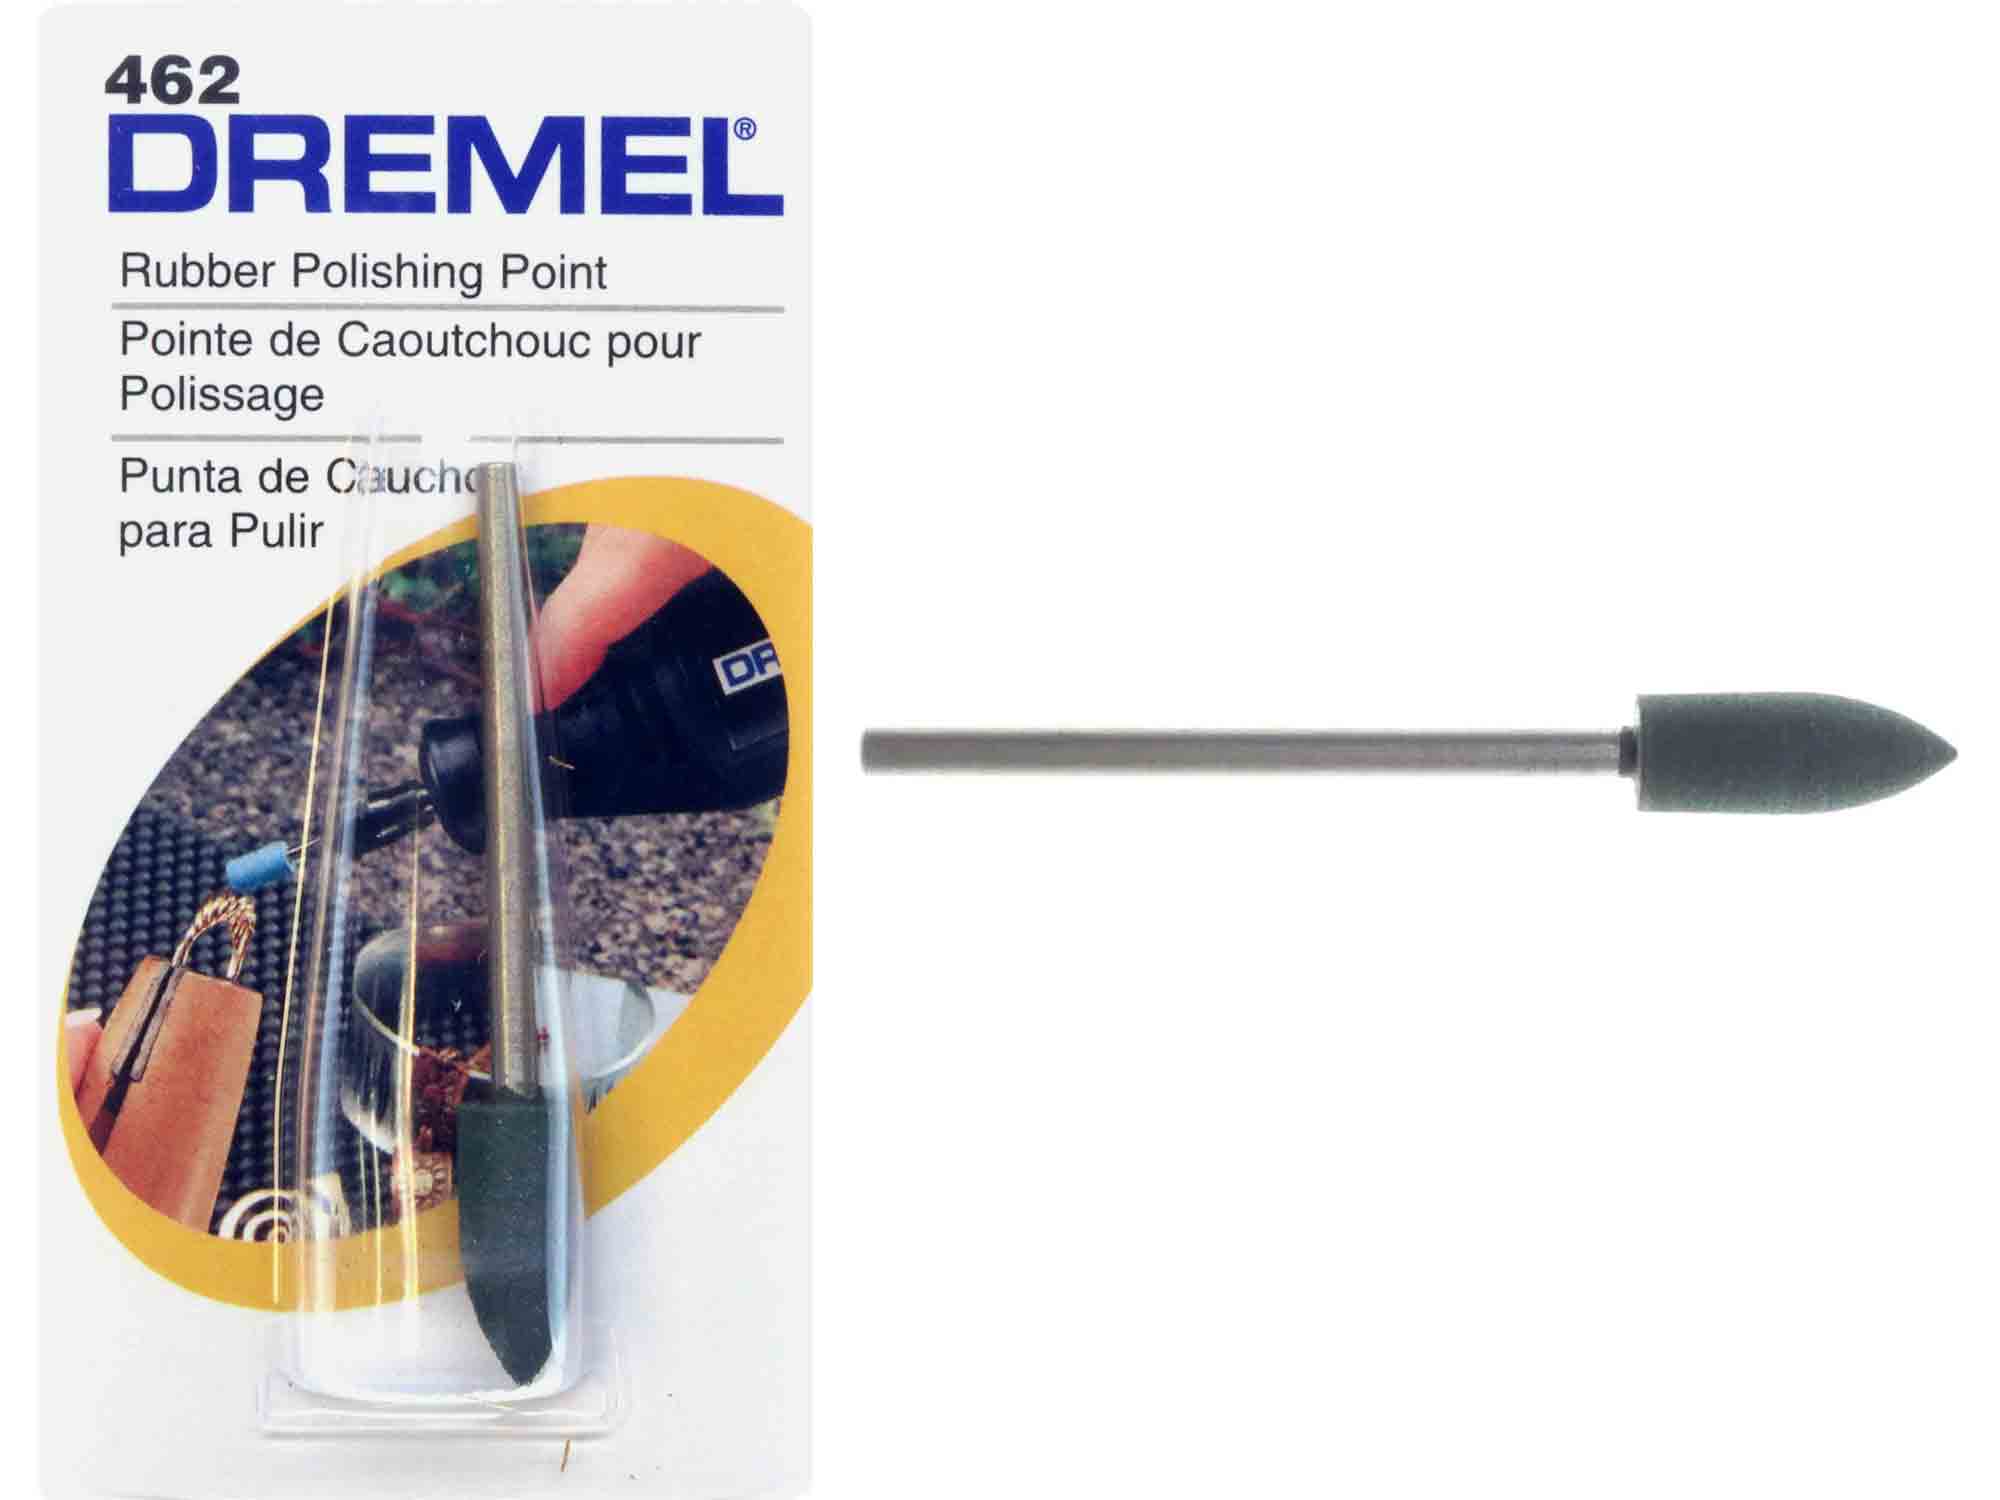 Dremel 462 - 1/4 inch Flame Rubber Polishing Point